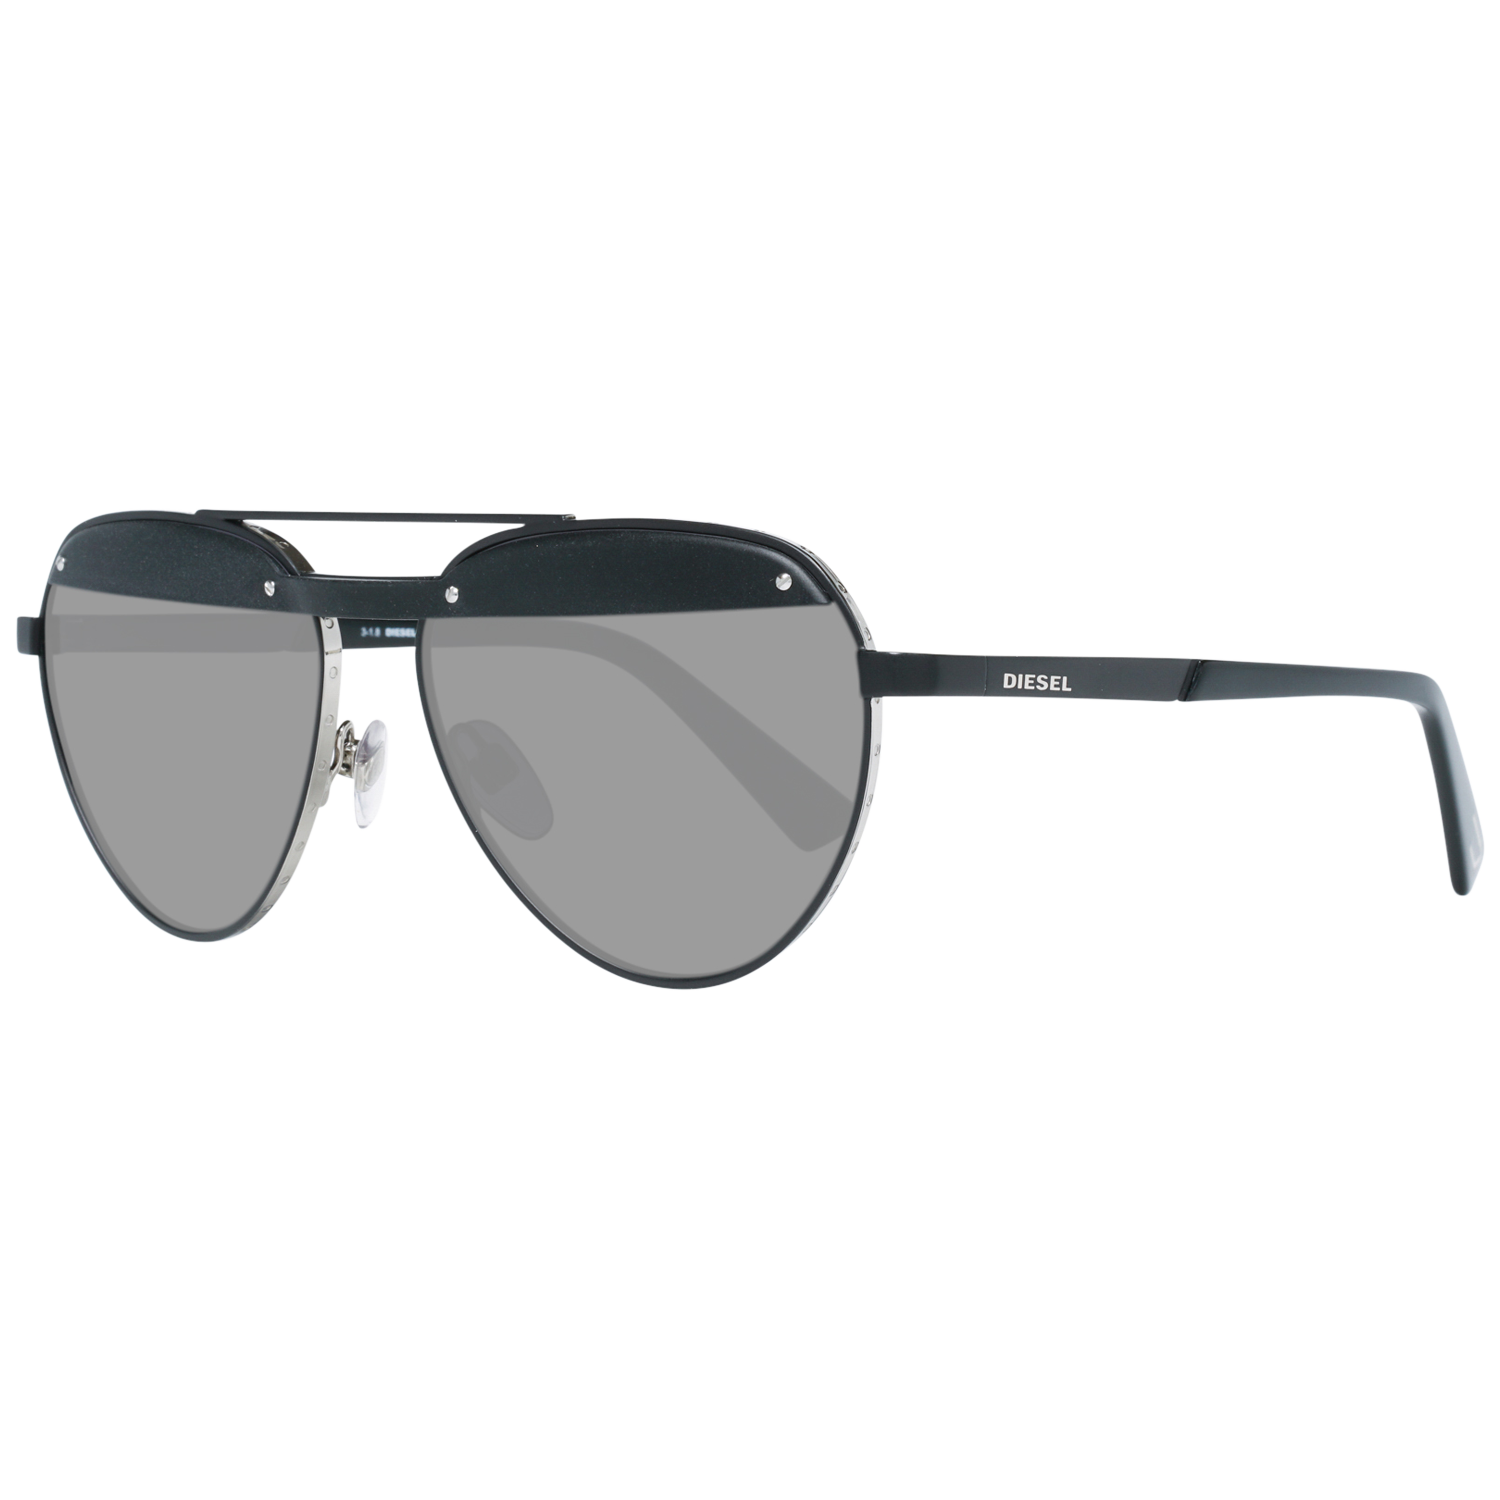 Diesel Sunglasses DL0261 02A 55